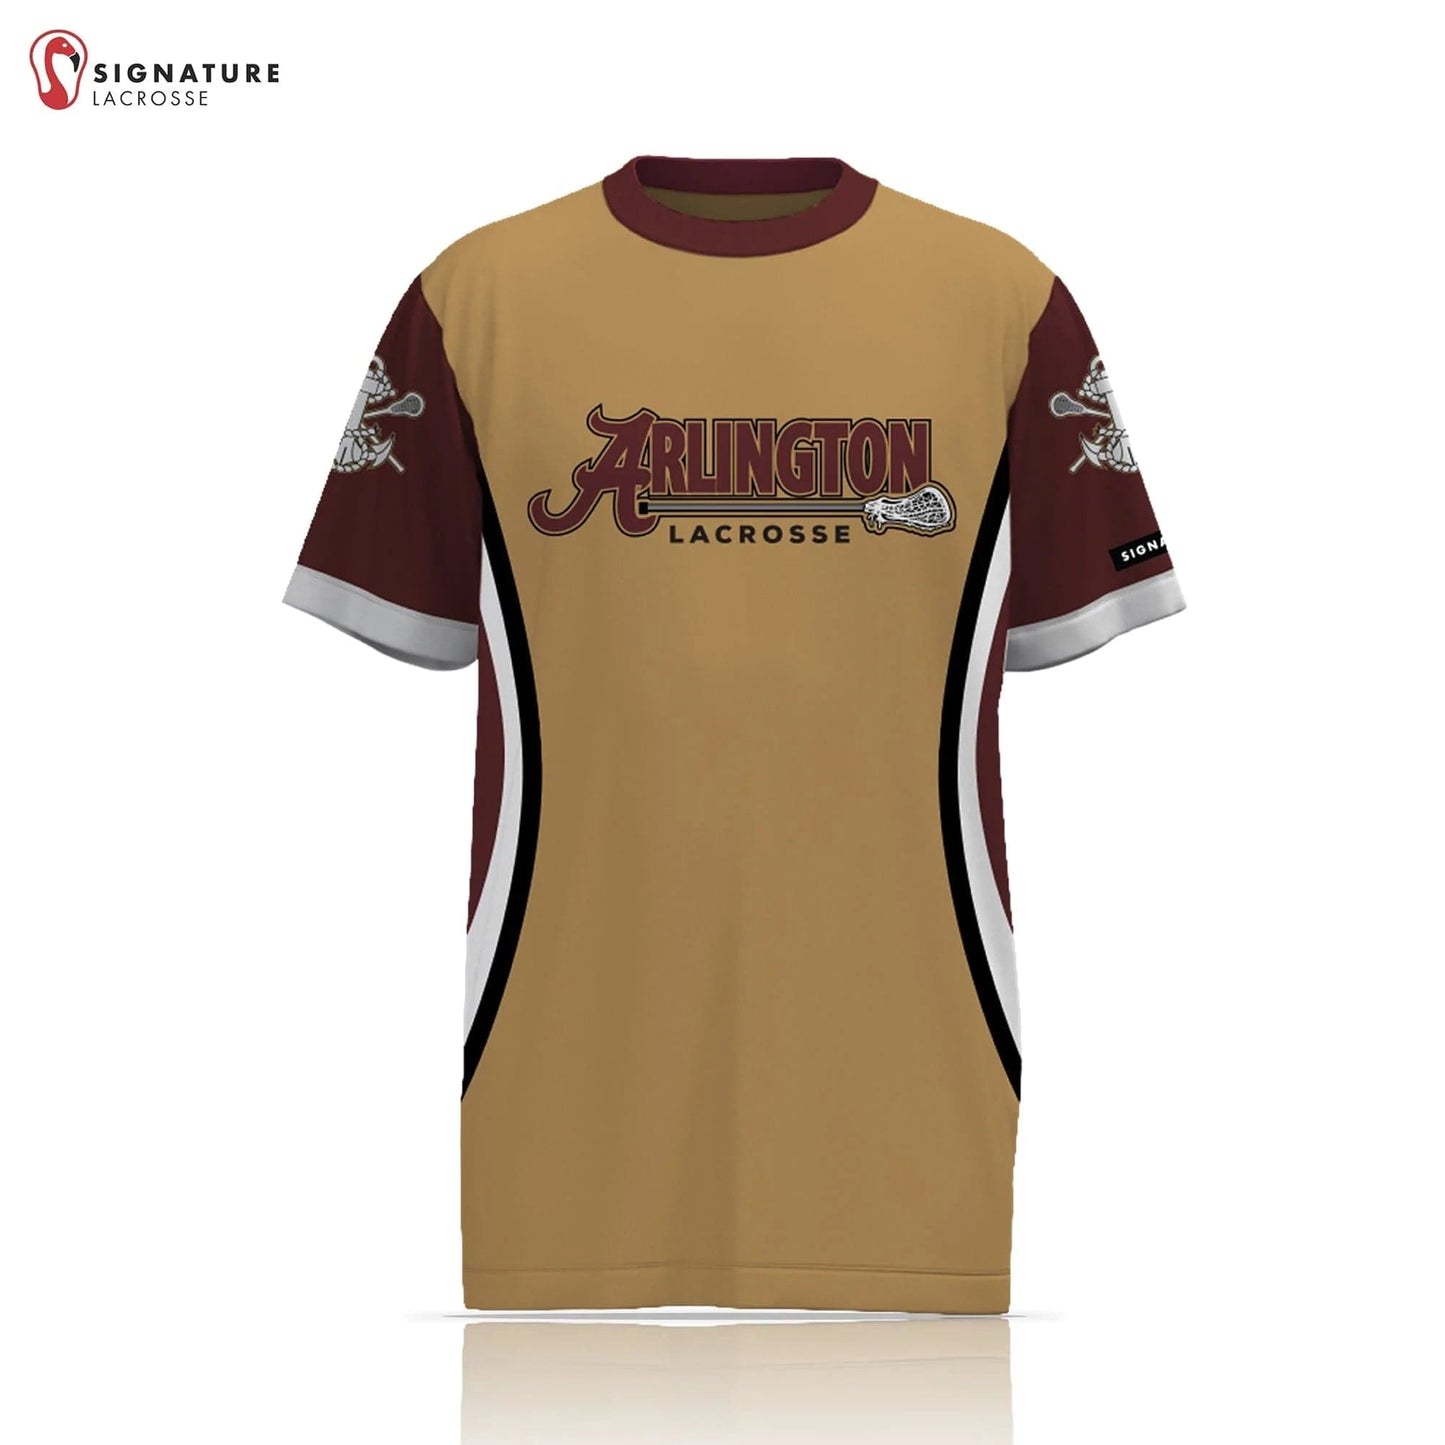 Arlington Lagrange Lacrosse Men's Short Sleeve Shooter Shirt: 3-4 Signature Lacrosse